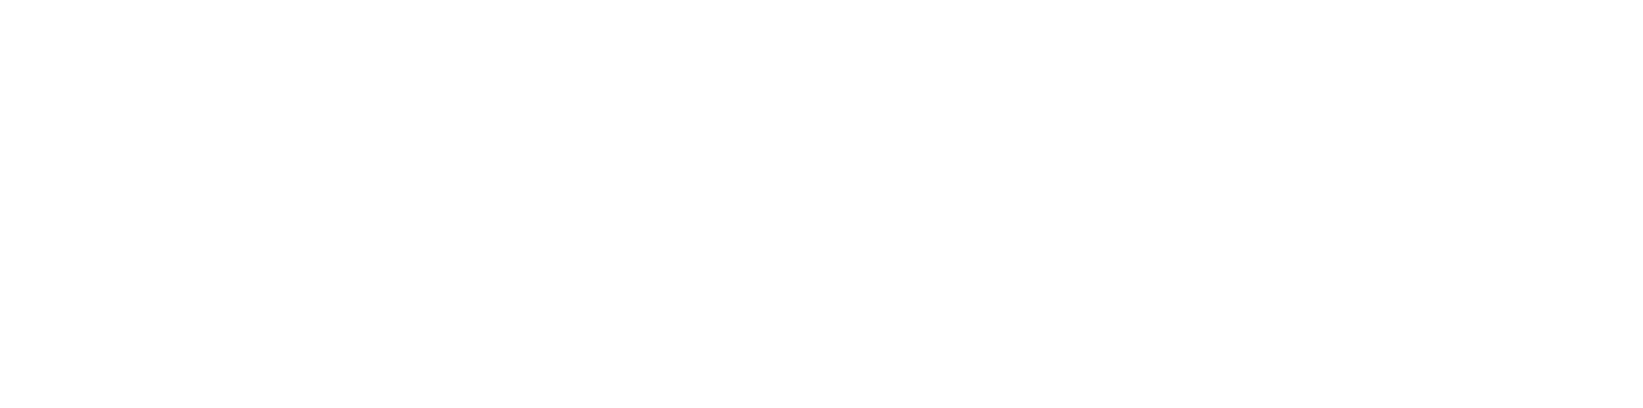 Ambev logo grand pour les fonds sombres (PNG transparent)